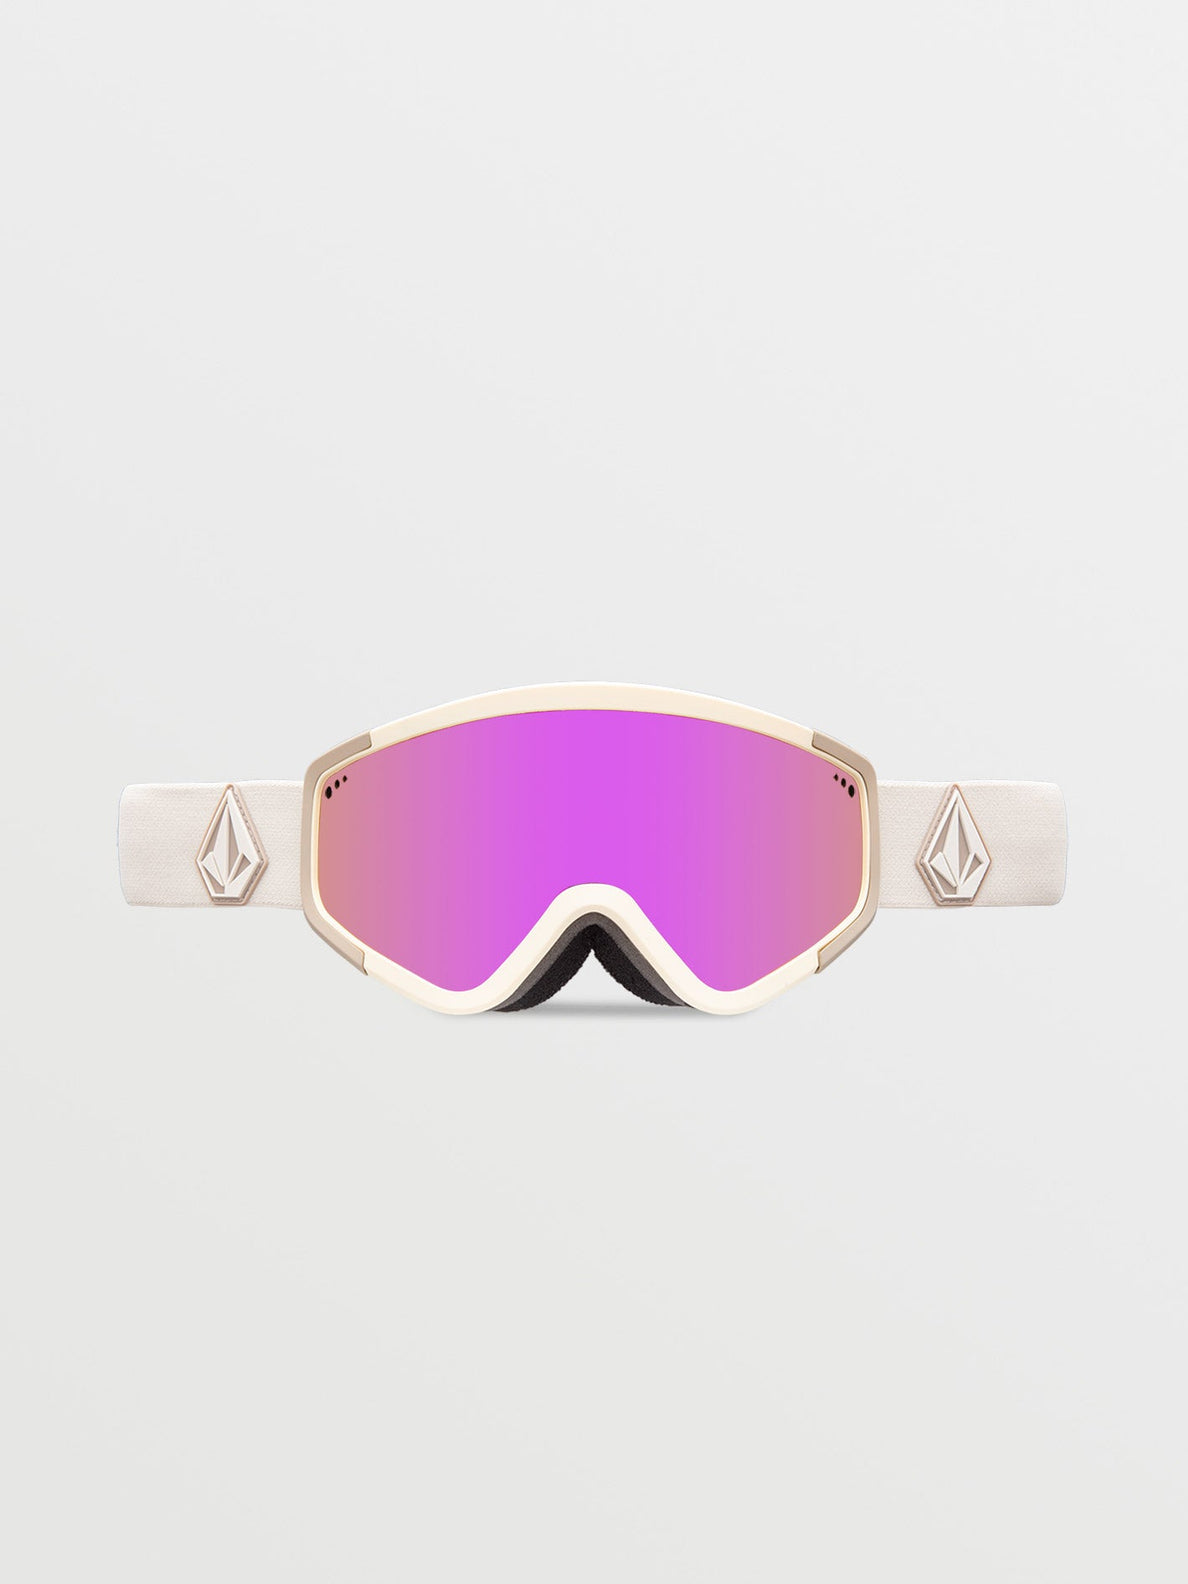 Attunga Goggle - Khakiest/Sand / Pink Chrome+BL